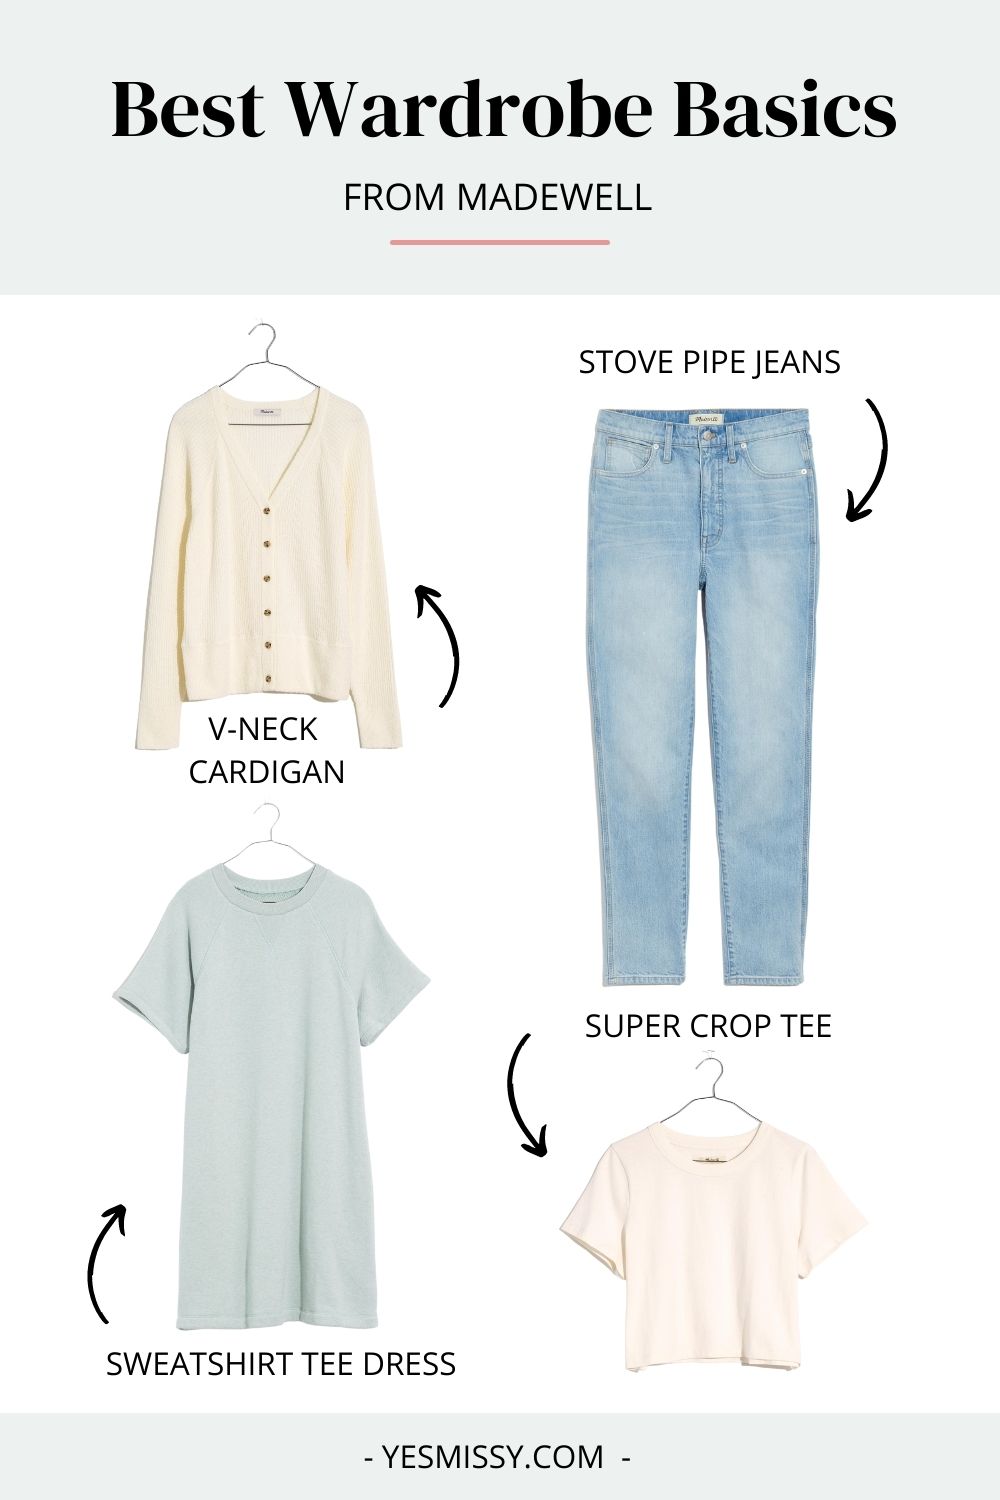 Where To Buy Good Basic T-shirts: Finding Wardrobe Staples